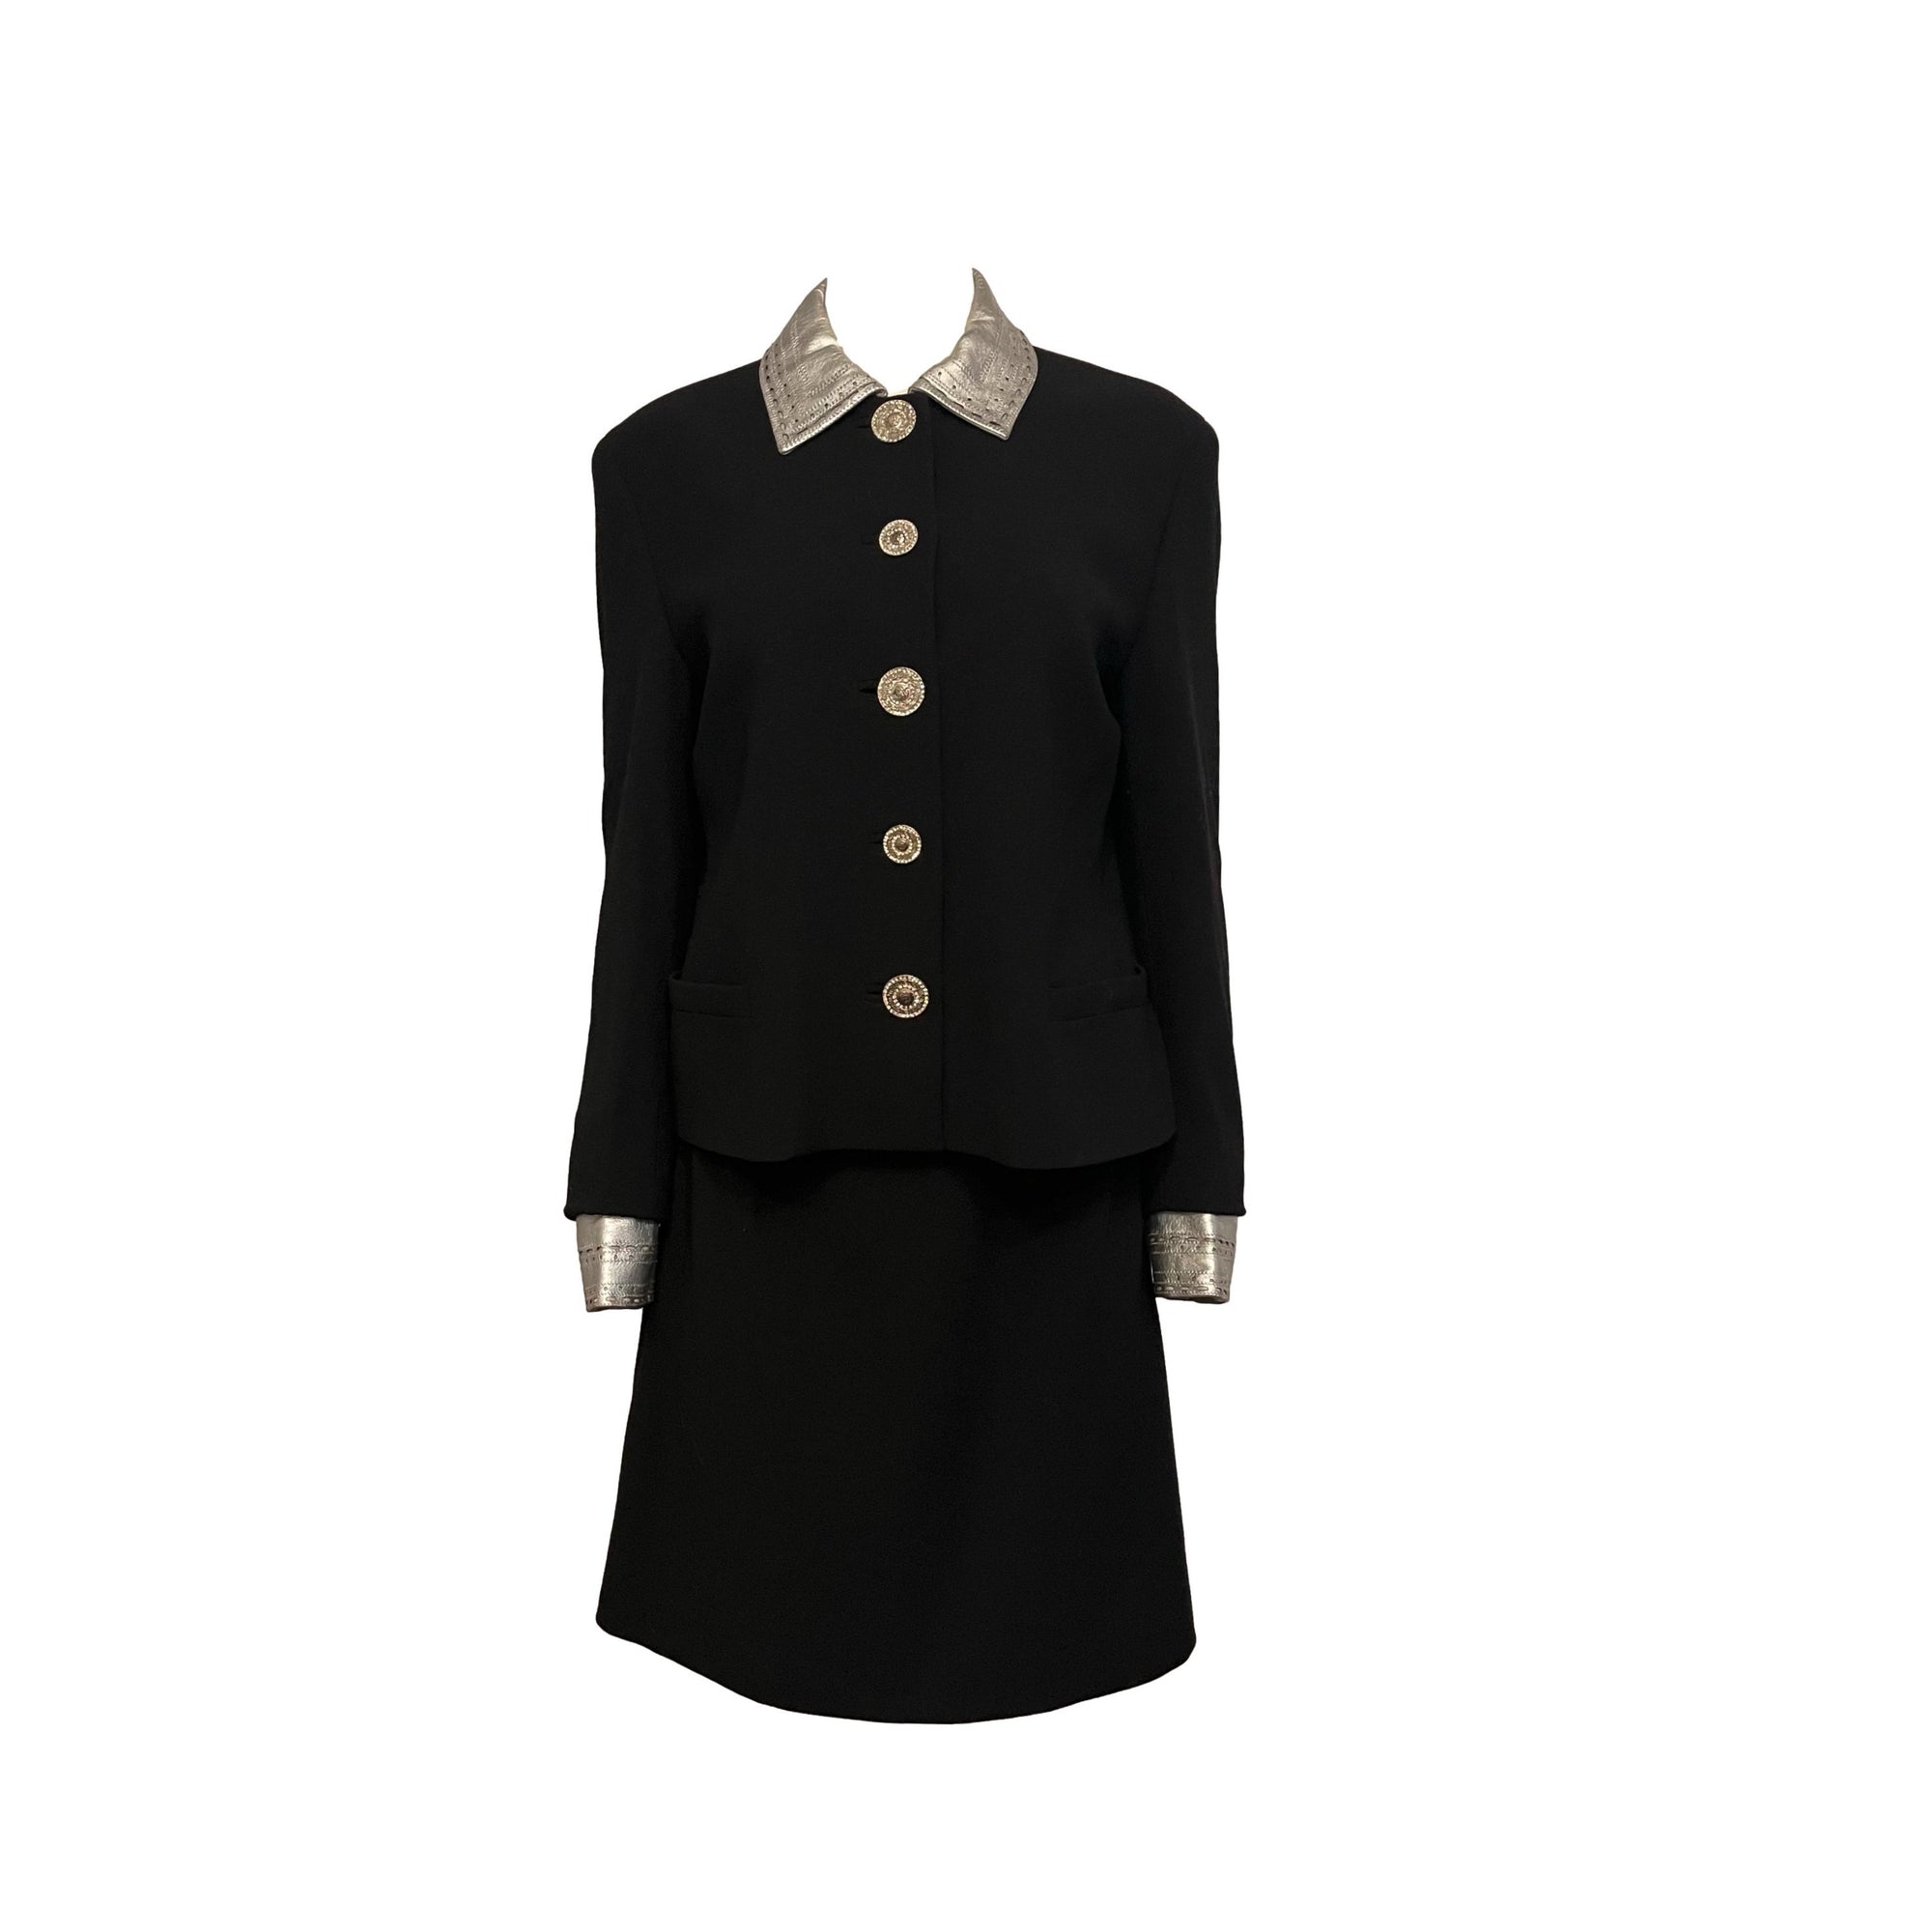 Versace Black Leather Trim Blazer Skirt Set - Apparel